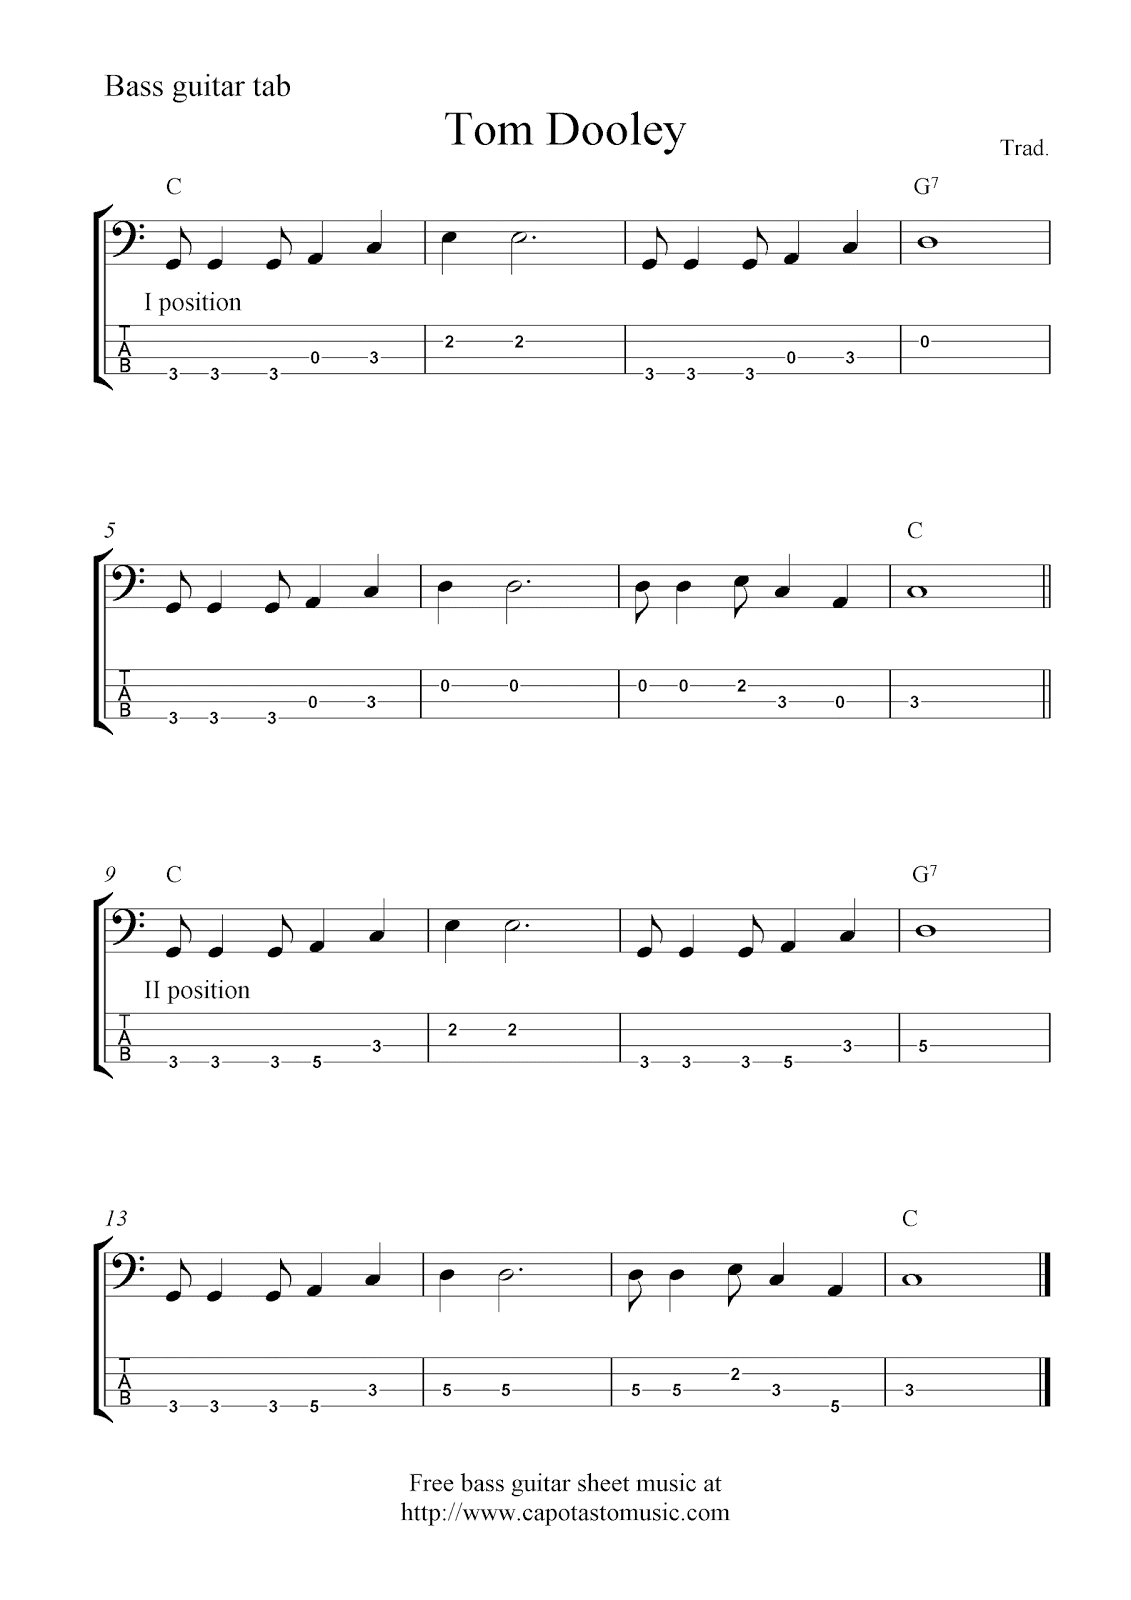 Bass Guitar Chord diagrams for: Eb Major 7th